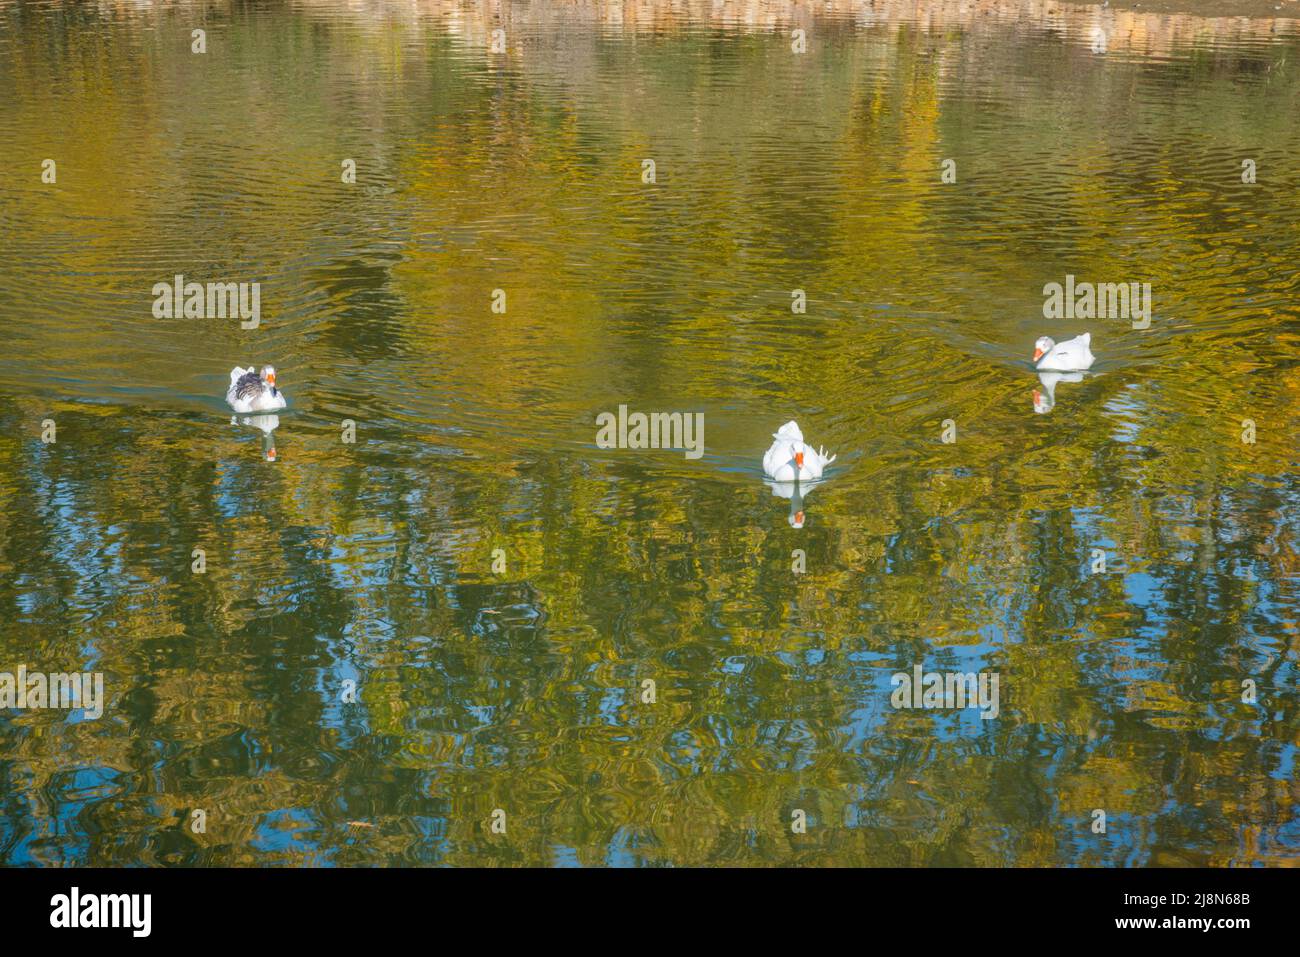 Three ducks in a lake. Stock Photo